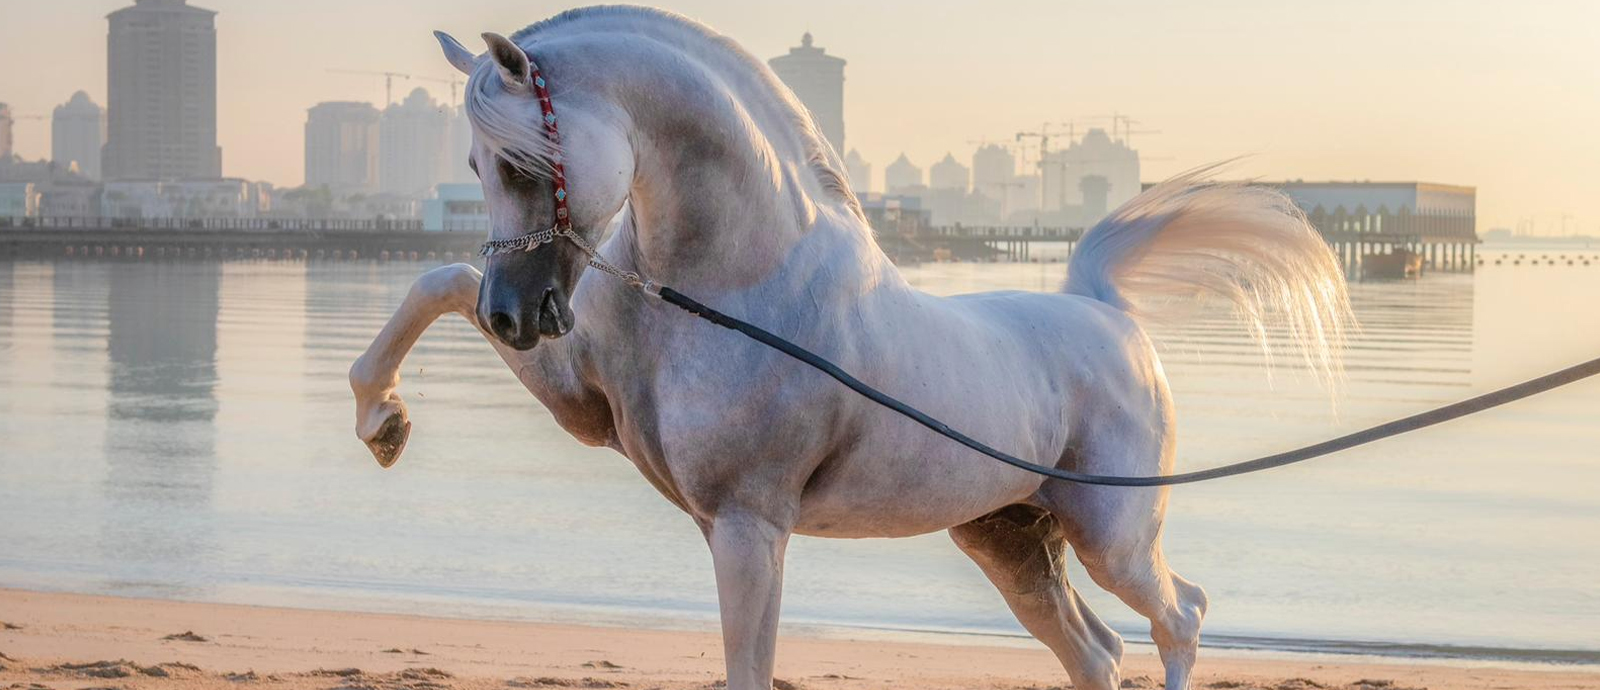  Katara International Arabian Horse Festival